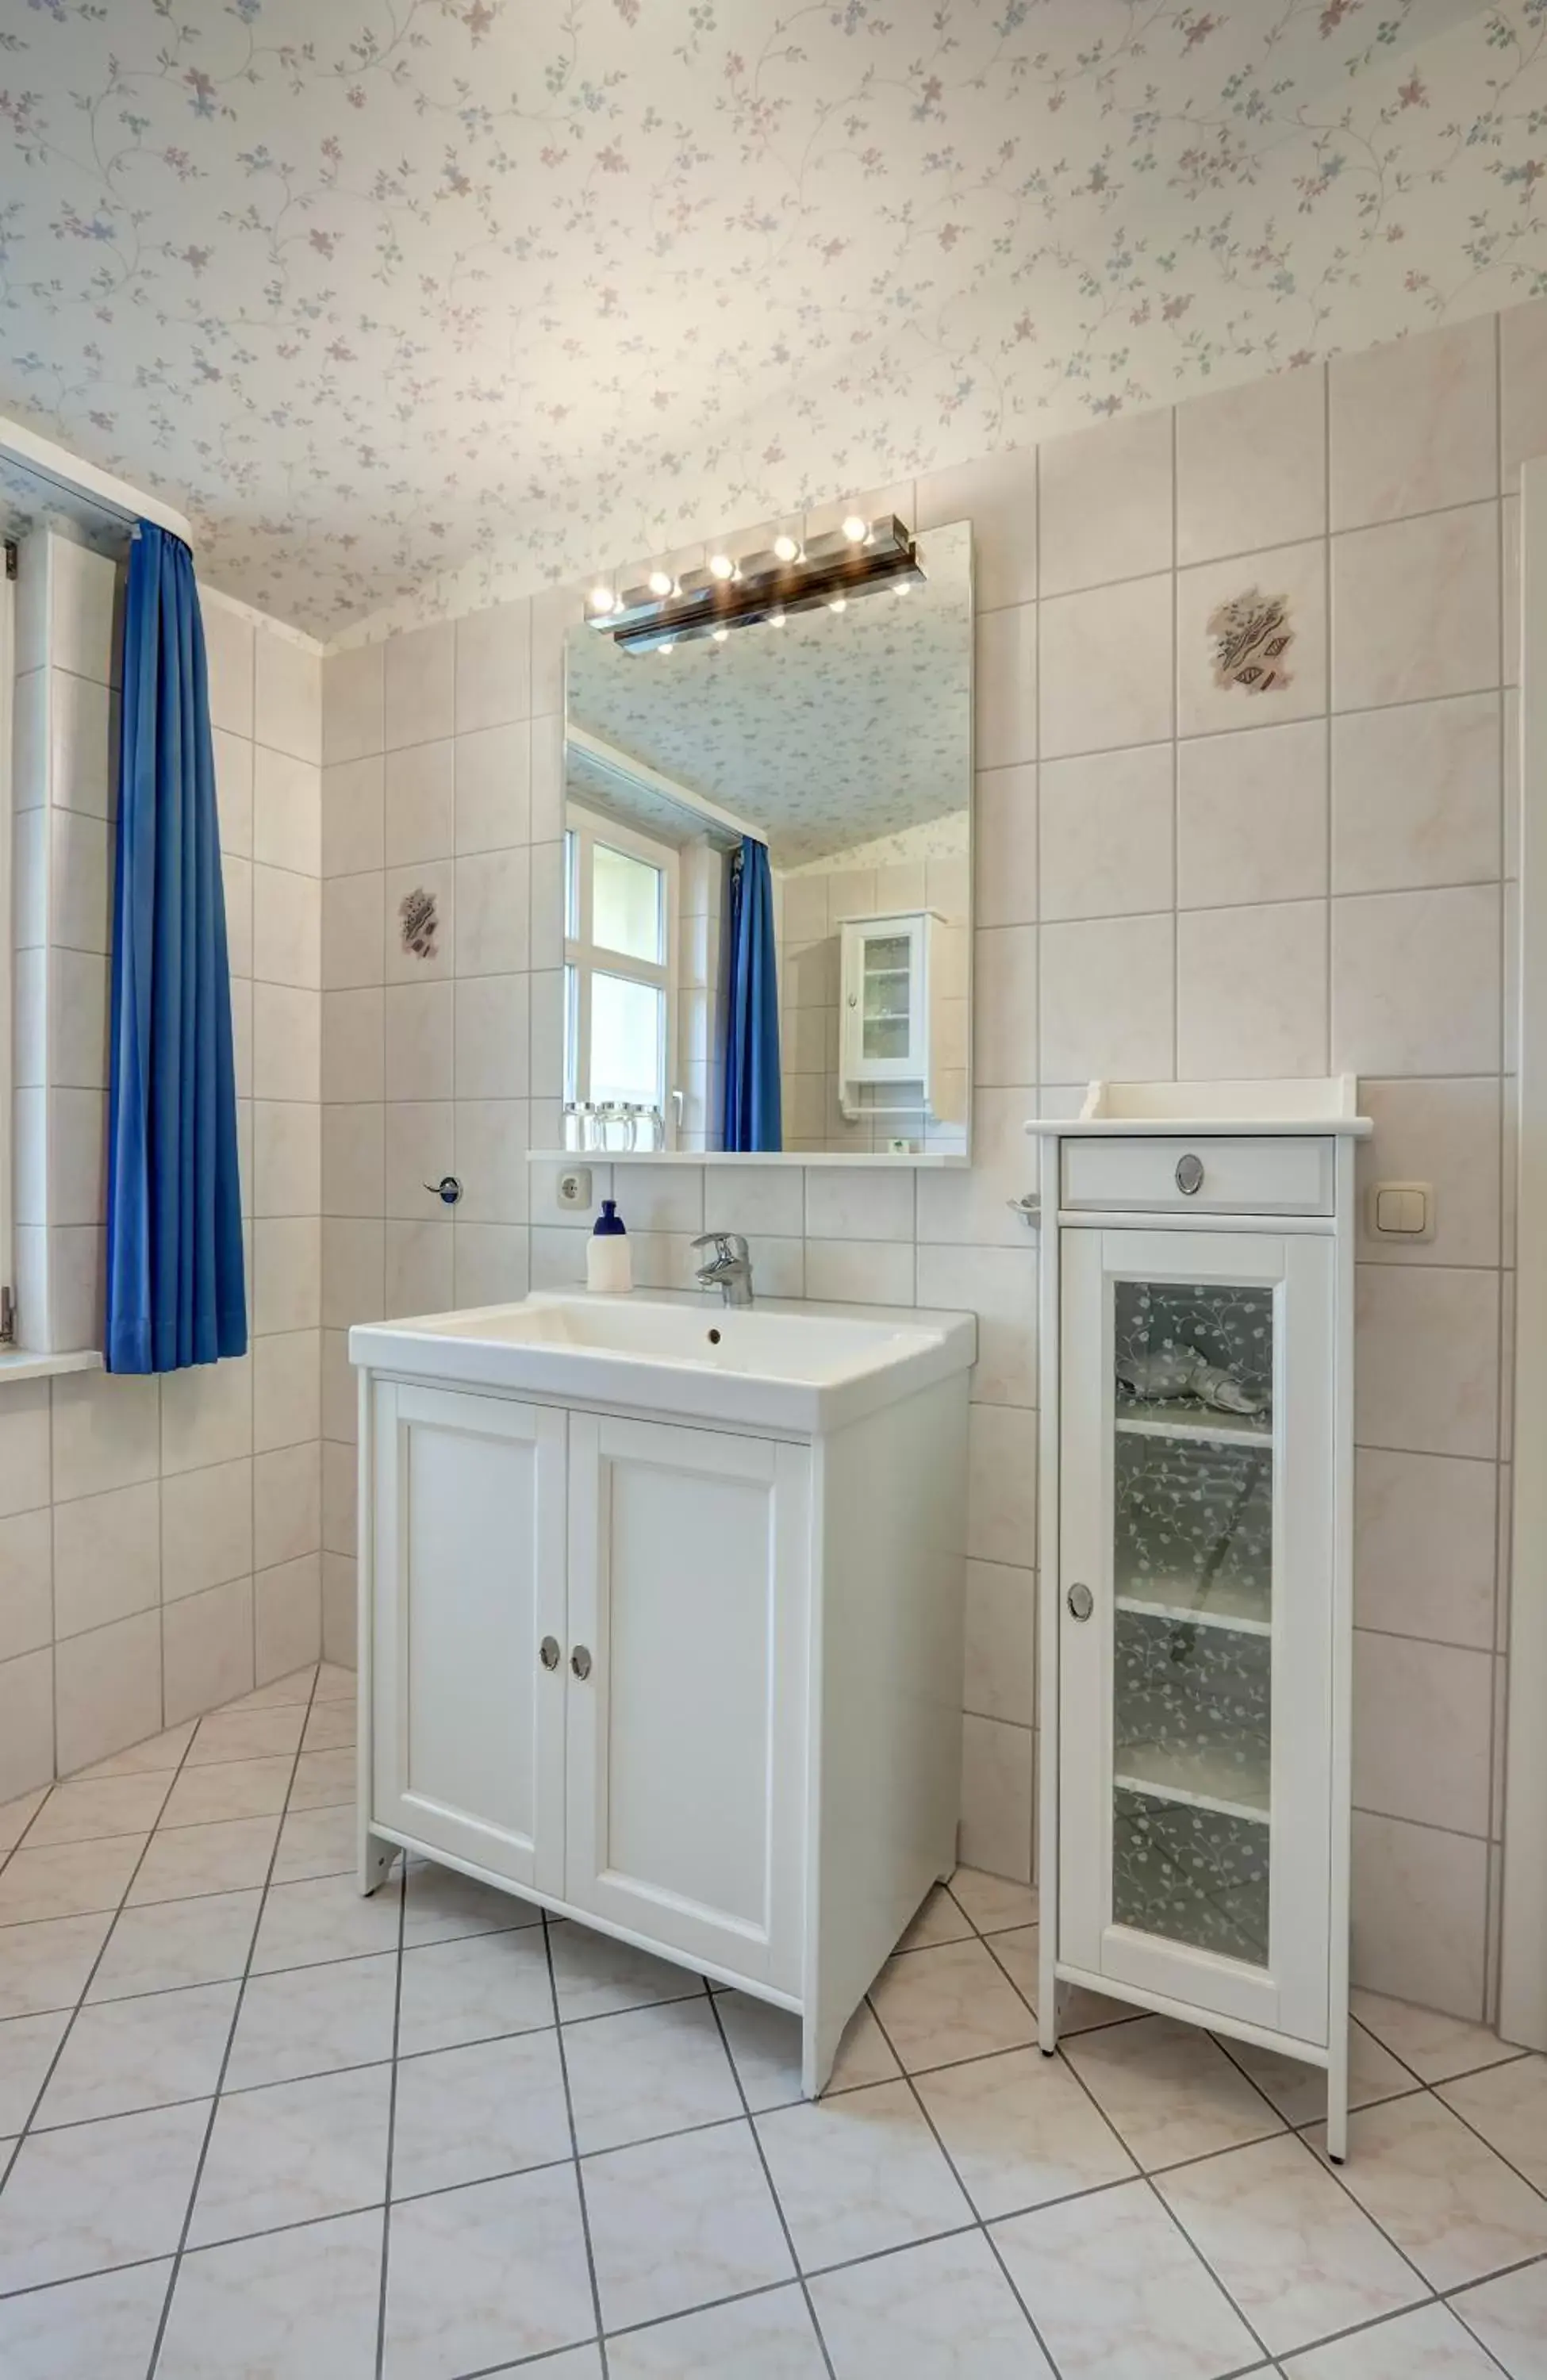 Photo of the whole room, Bathroom in Hotel Villa Seeschlößchen